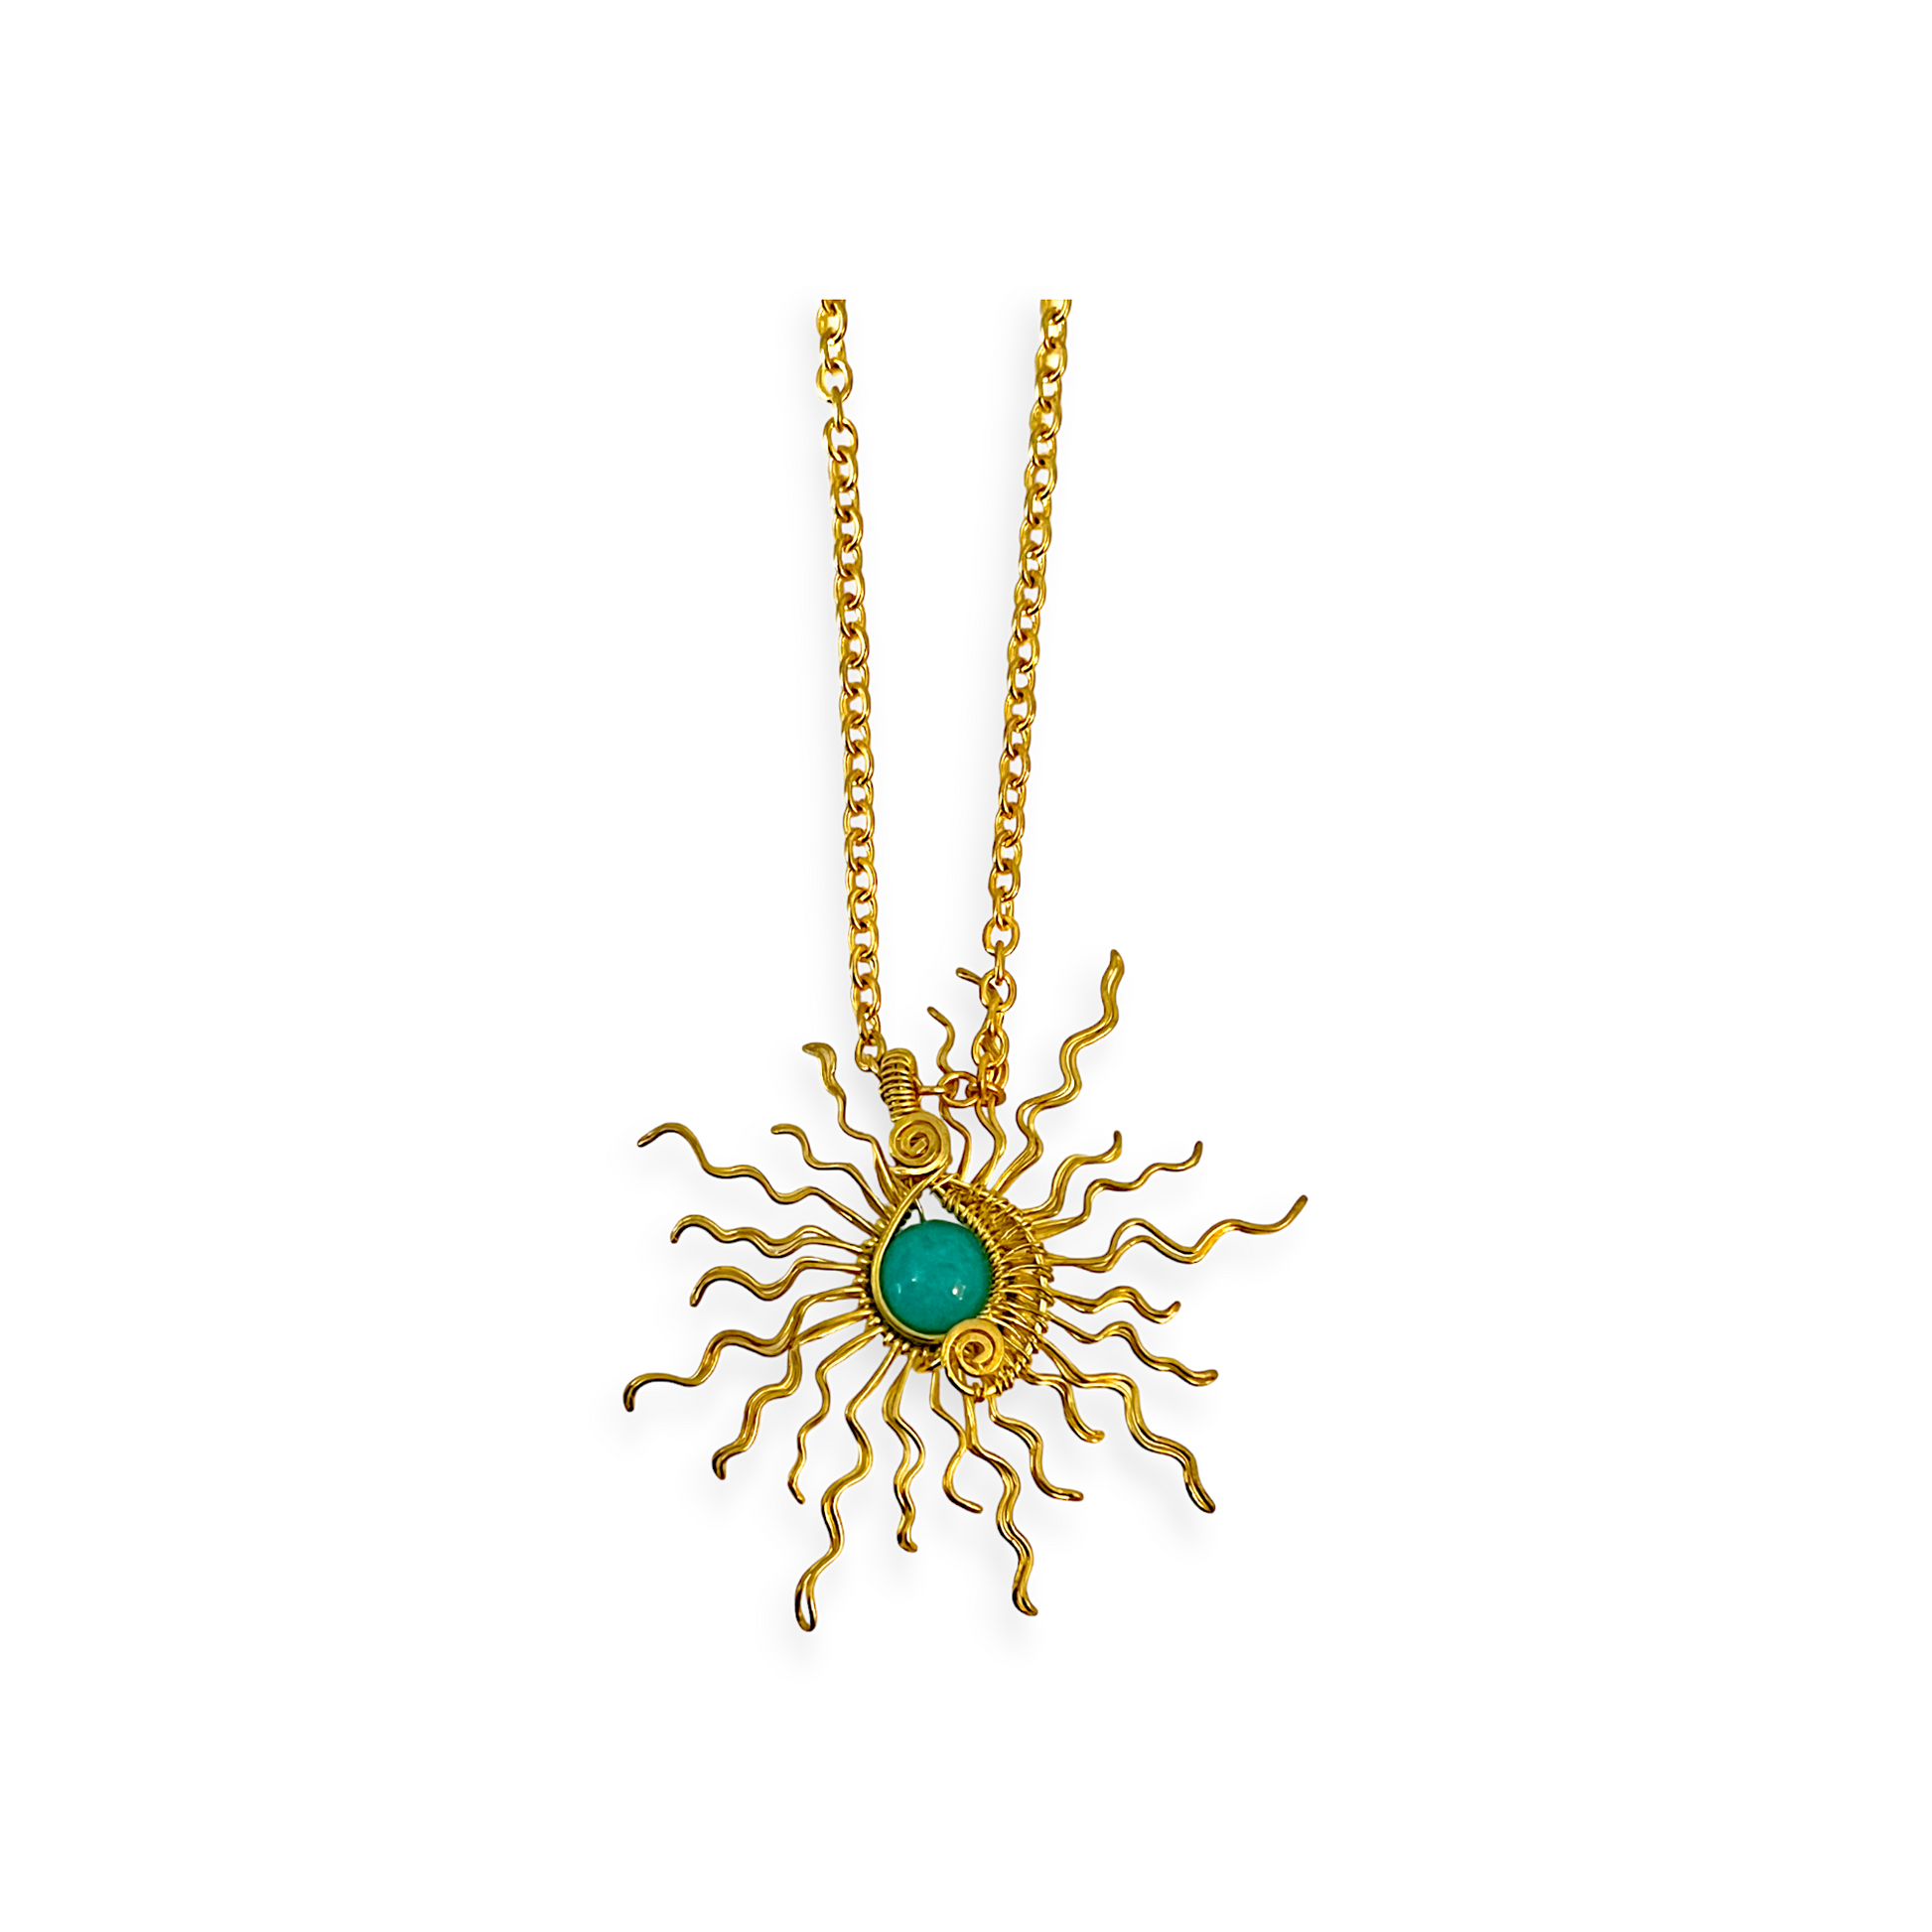 Sun pendant necklace with a light blue stone center - Sundara Joon